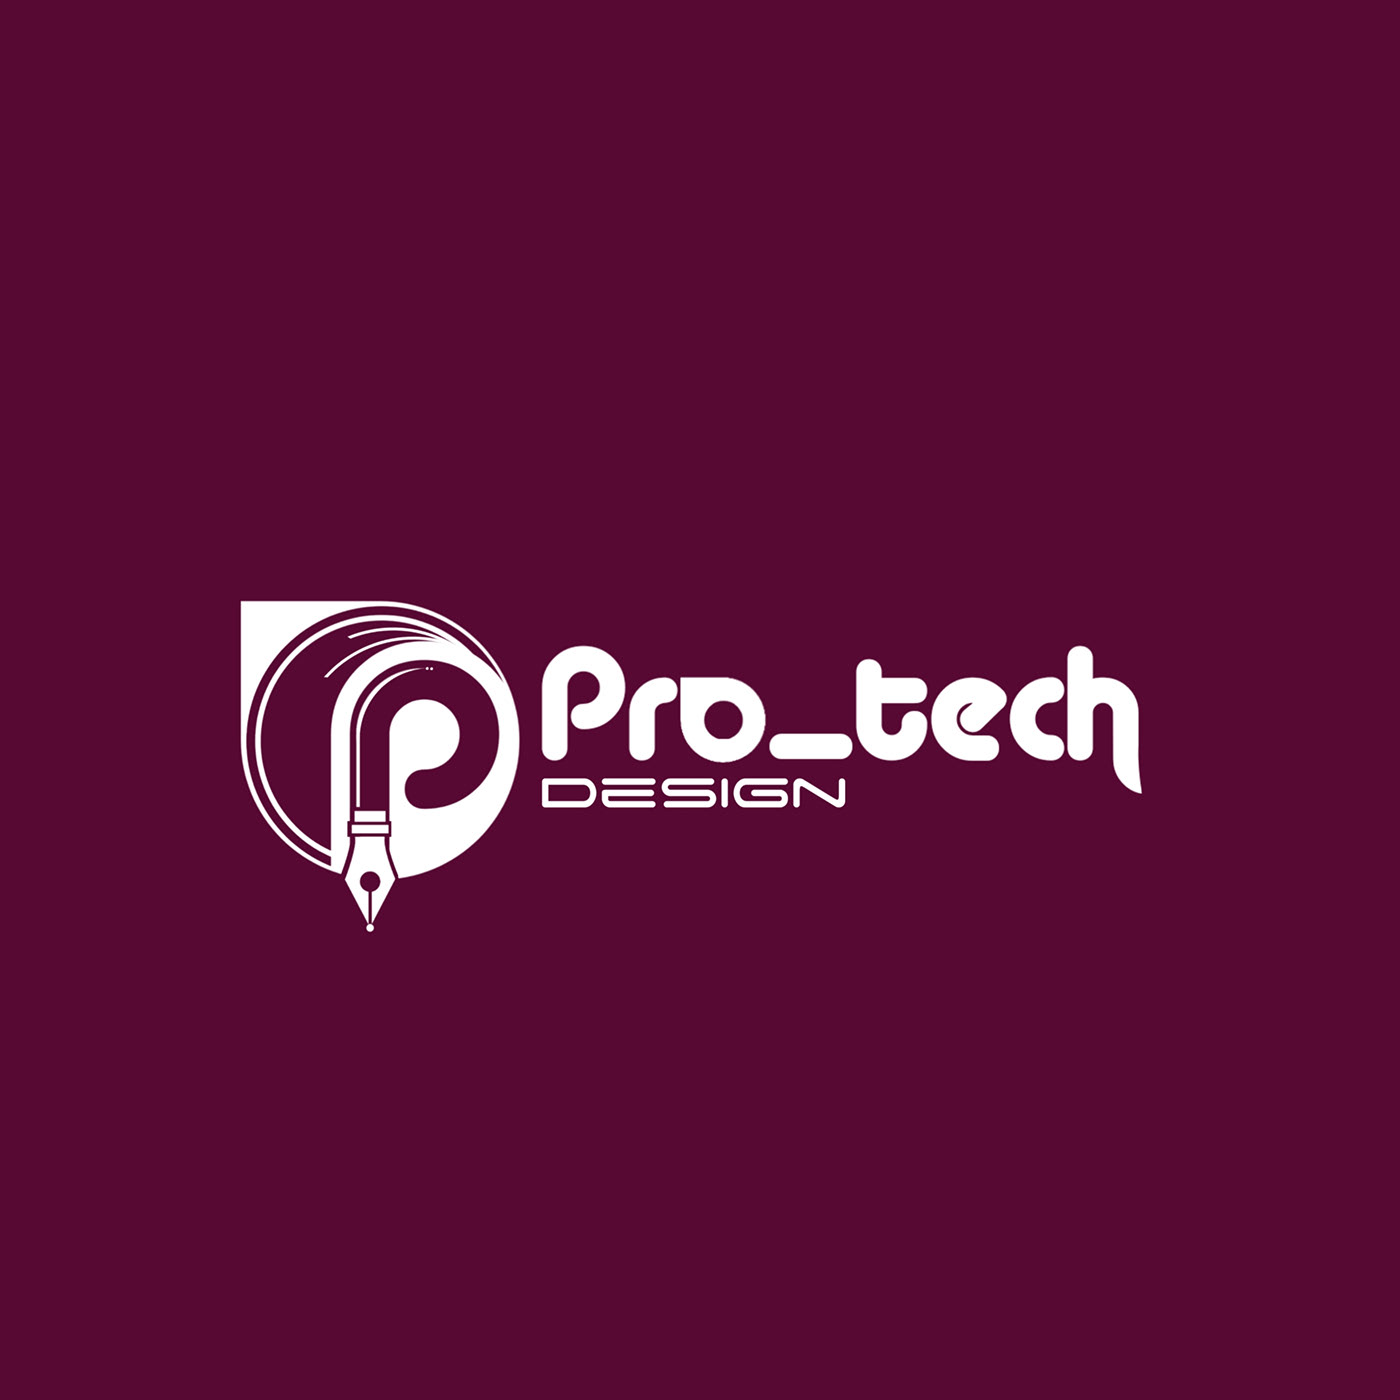 admiration logo Pro_techdesign